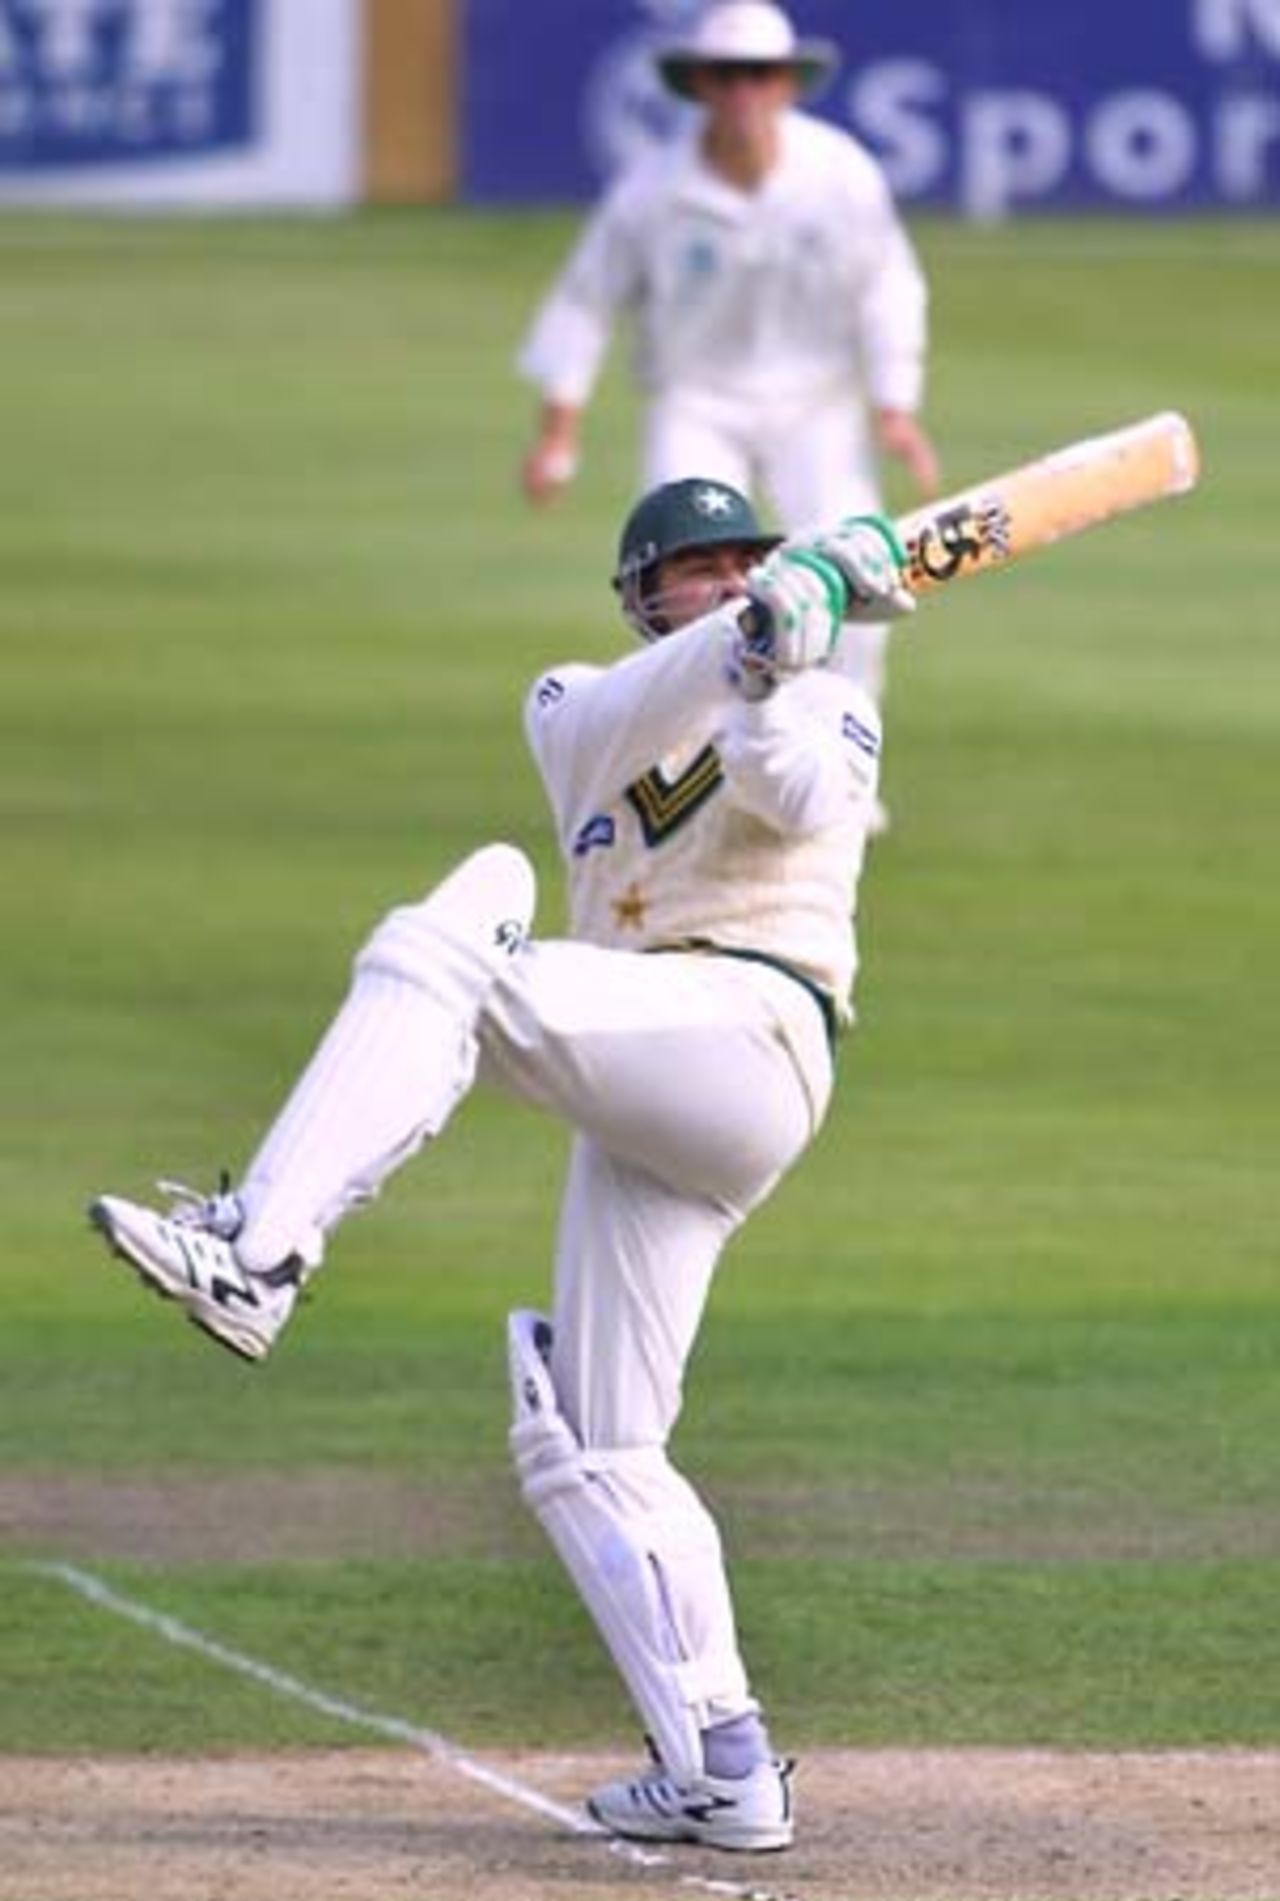 Pakistan batsman Inzamam-ul-Haq hooks a ball during his first innings of 130. 2nd Test: New Zealand v Pakistan at Jade Stadium, Christchurch, 15-19 March 2001 (17 March 2001).